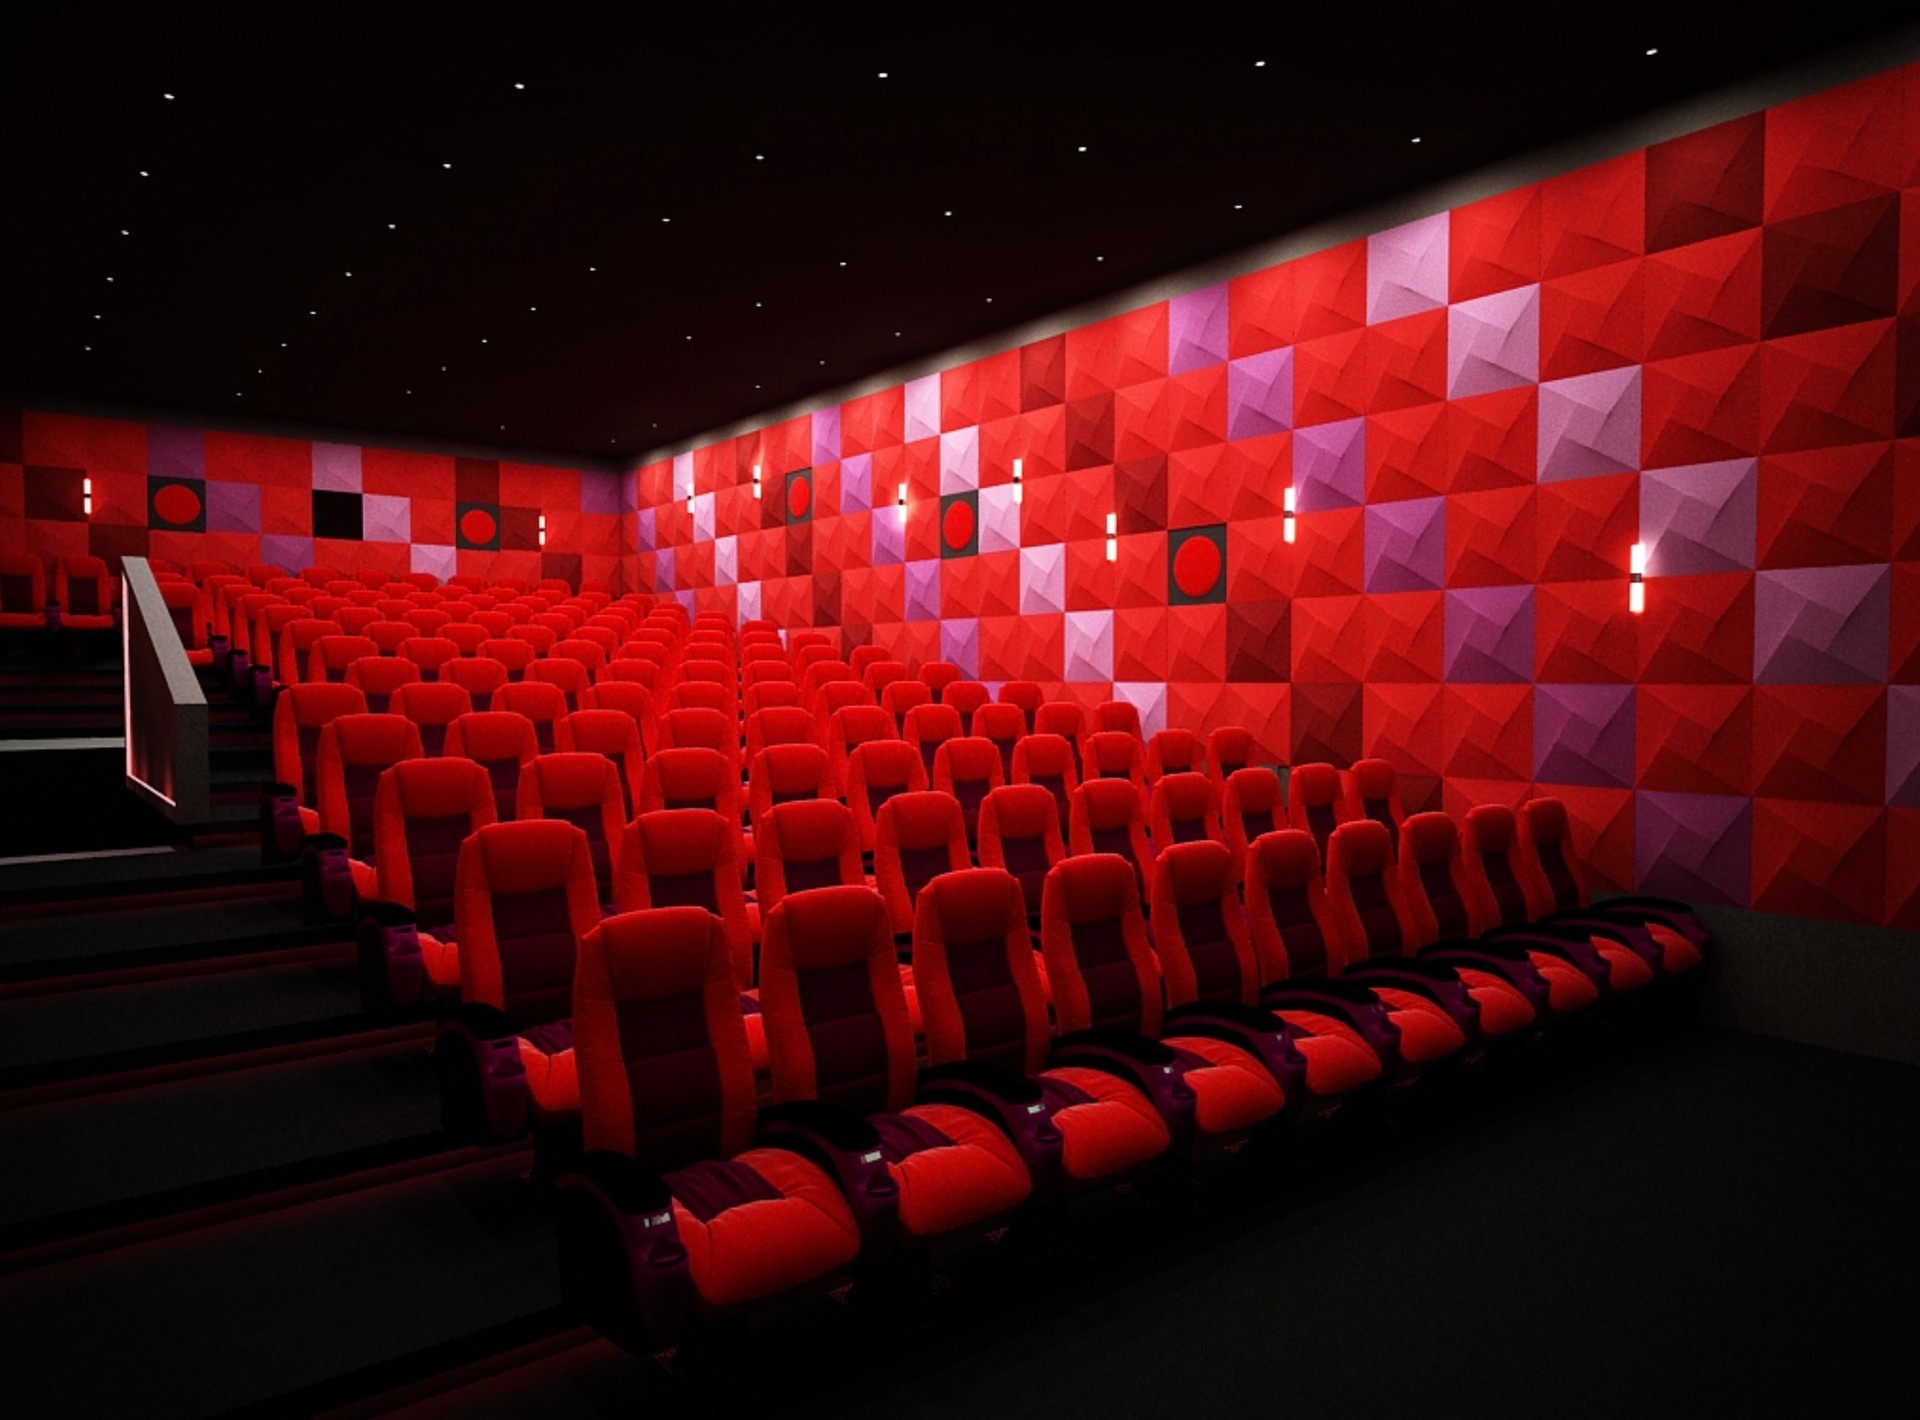 Theatre seats. Кресла в кинотеатре. Красные кресла в кинотеатре. Кинотеатр без сидушек. Кинотеатр в темноте.